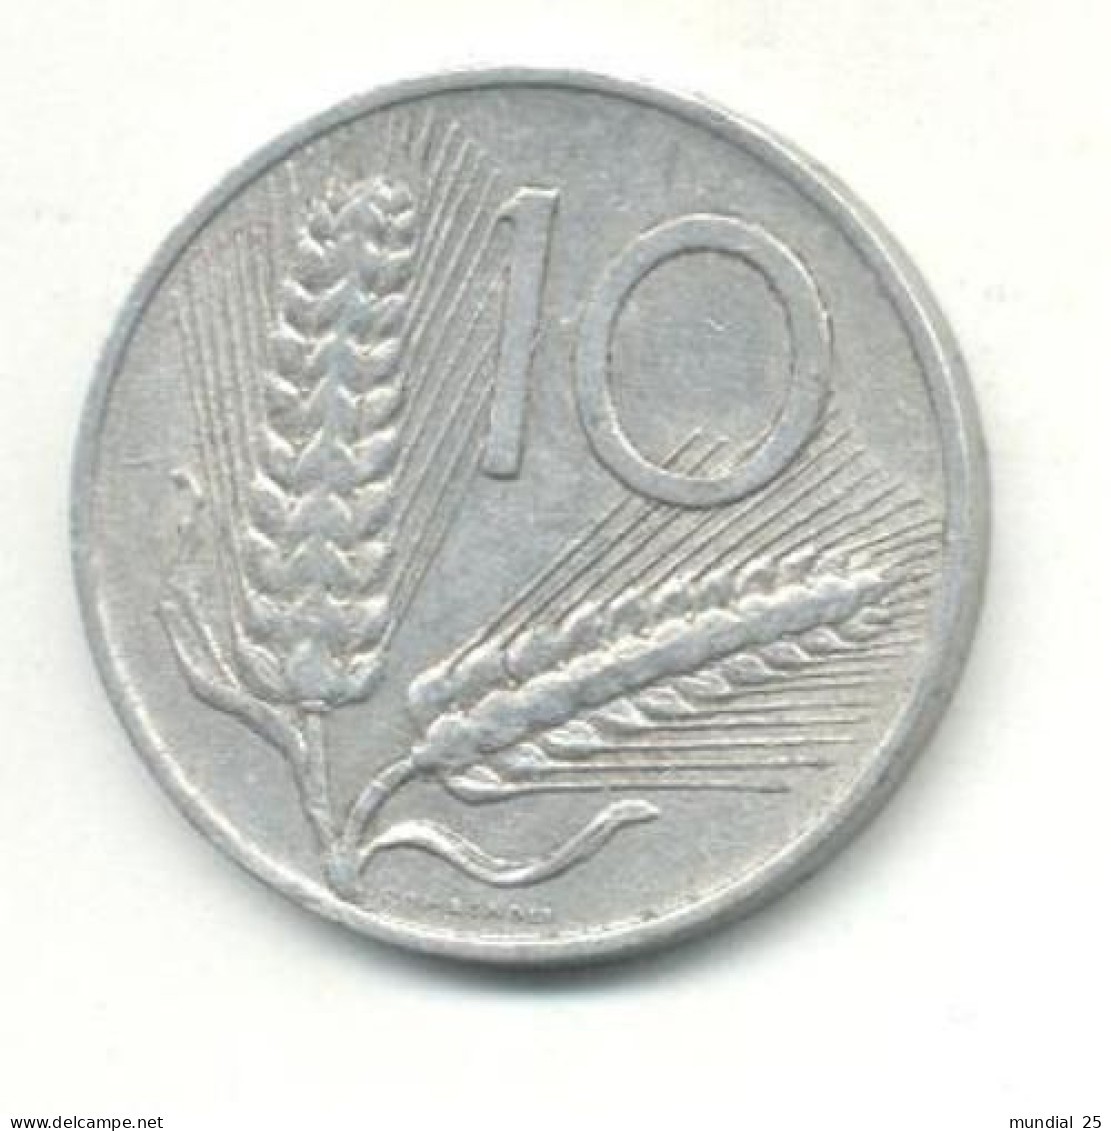 ITALY 10 LIRE 1972 R - 10 Lire